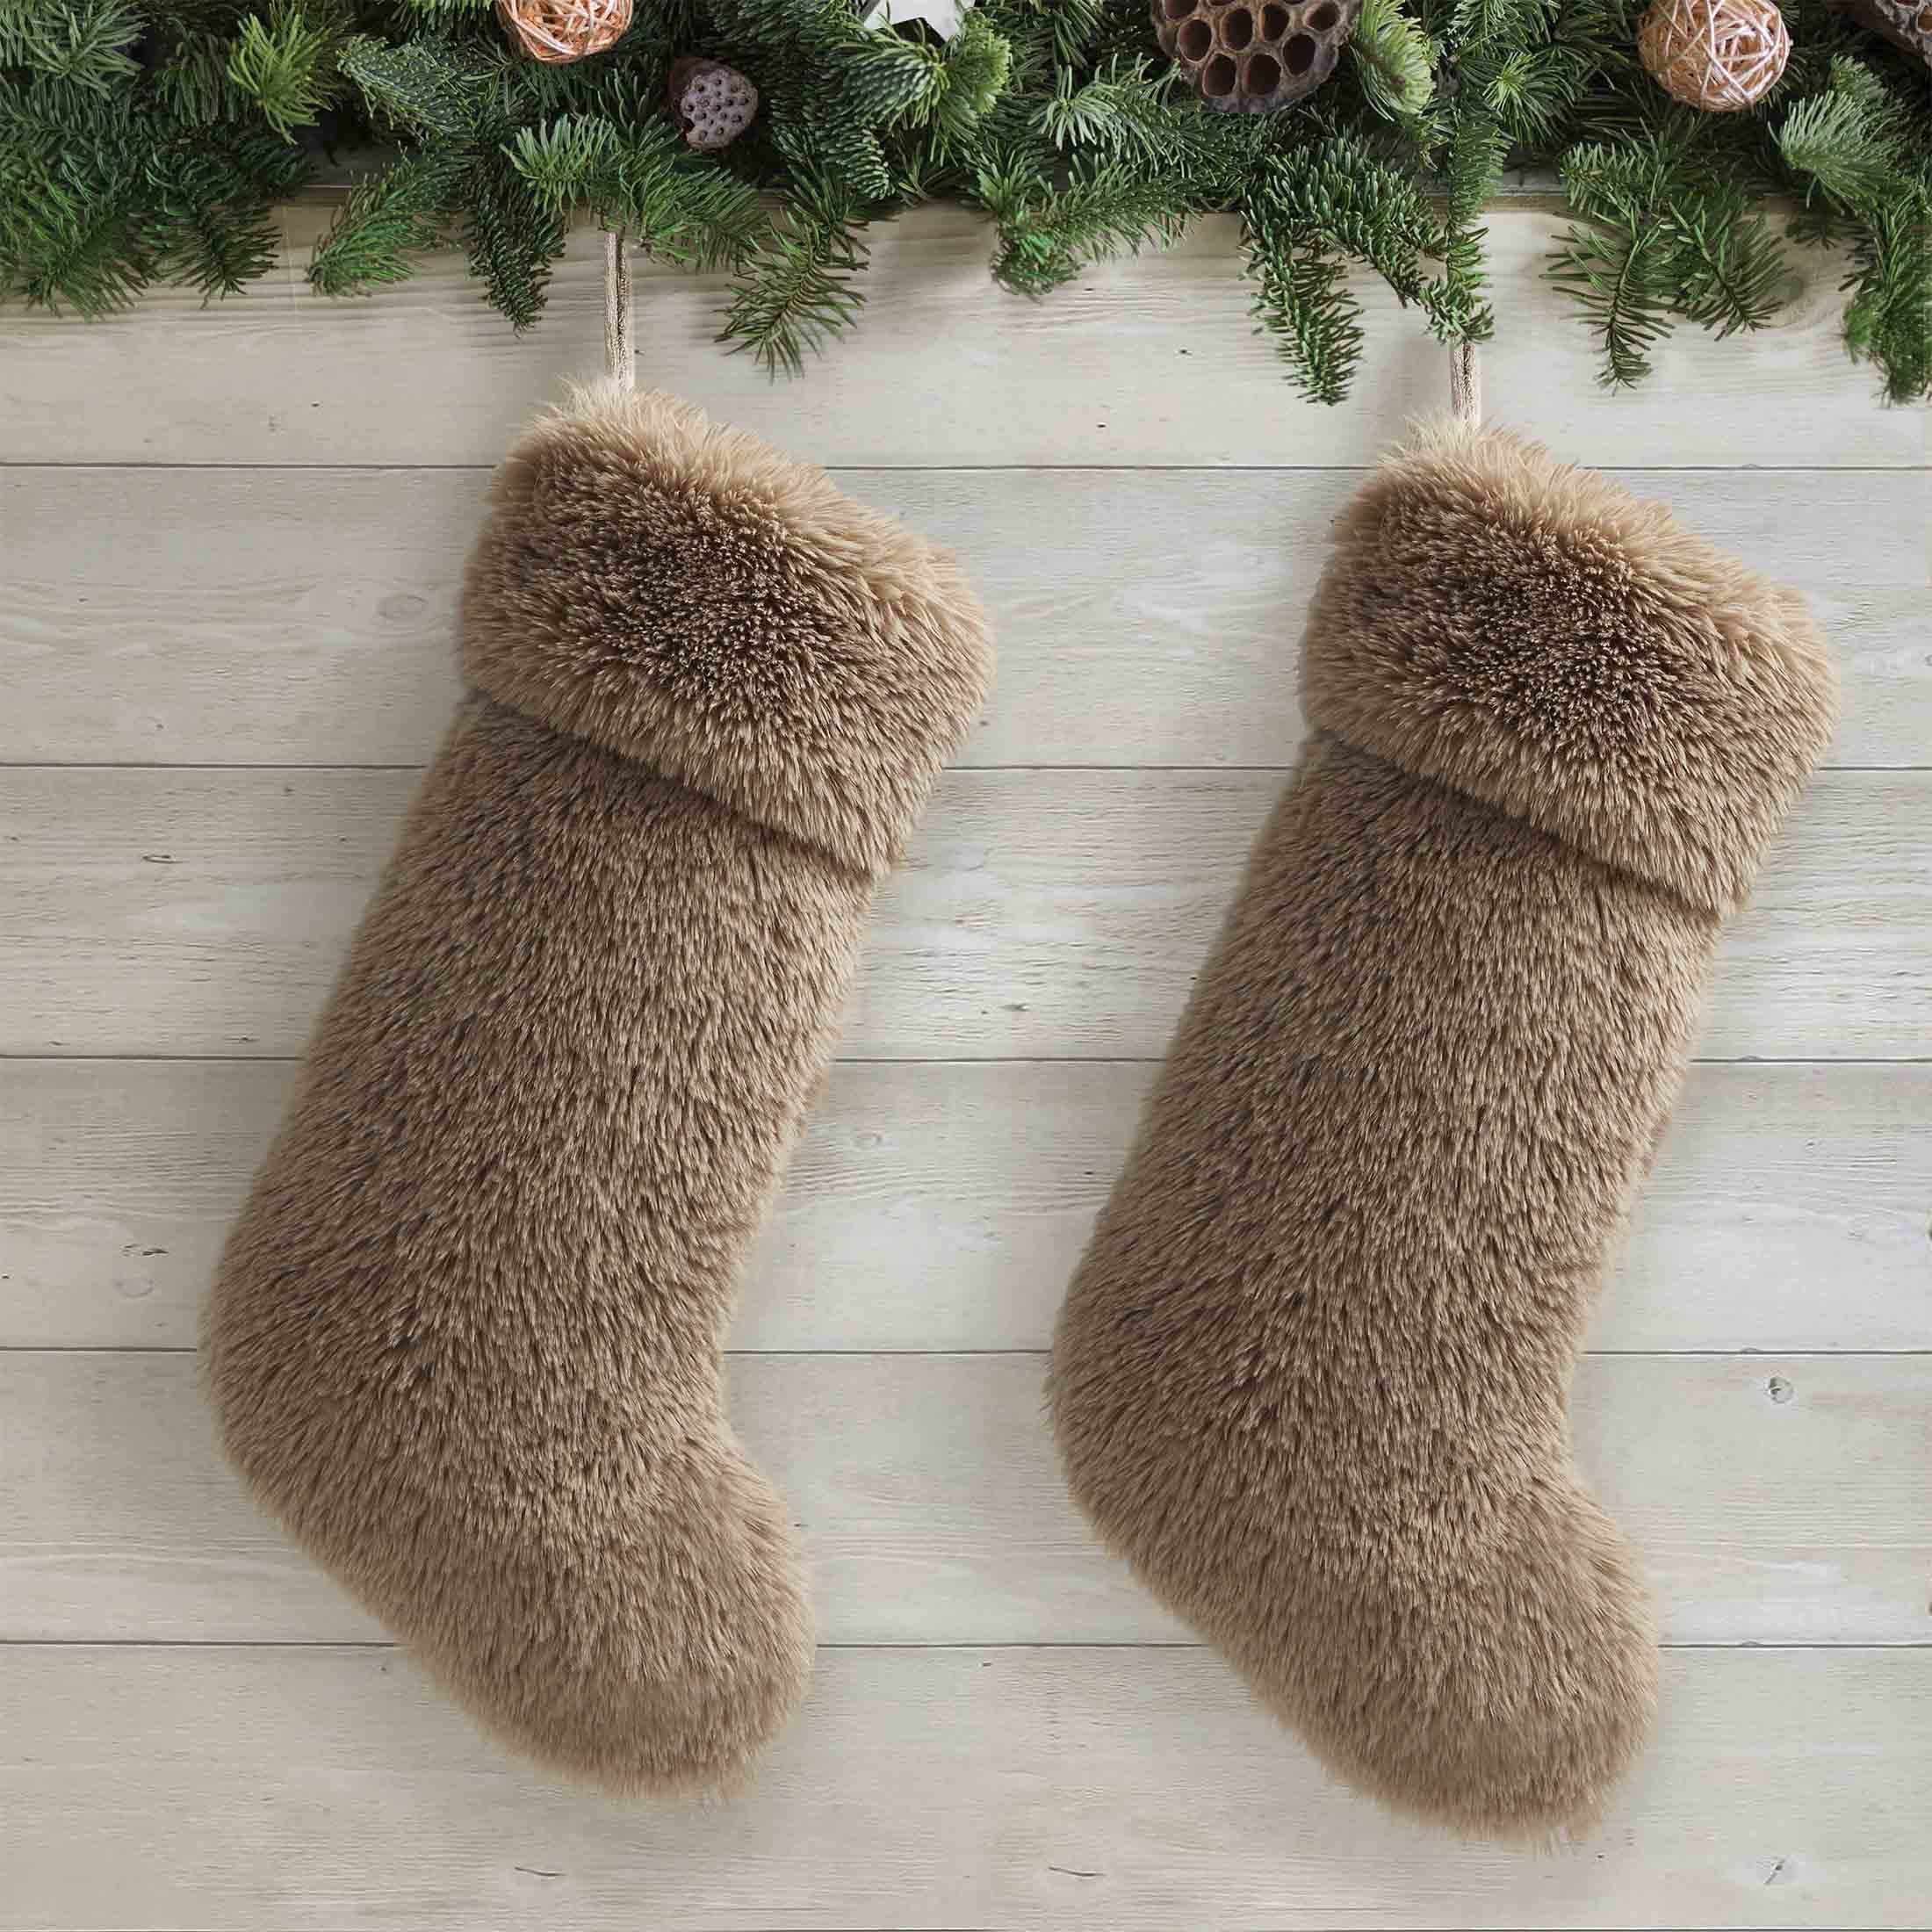 My Texas House Angel Tan Faux Fur Christmas Stockings, 20" x 10" (2 Count) | Walmart (US)